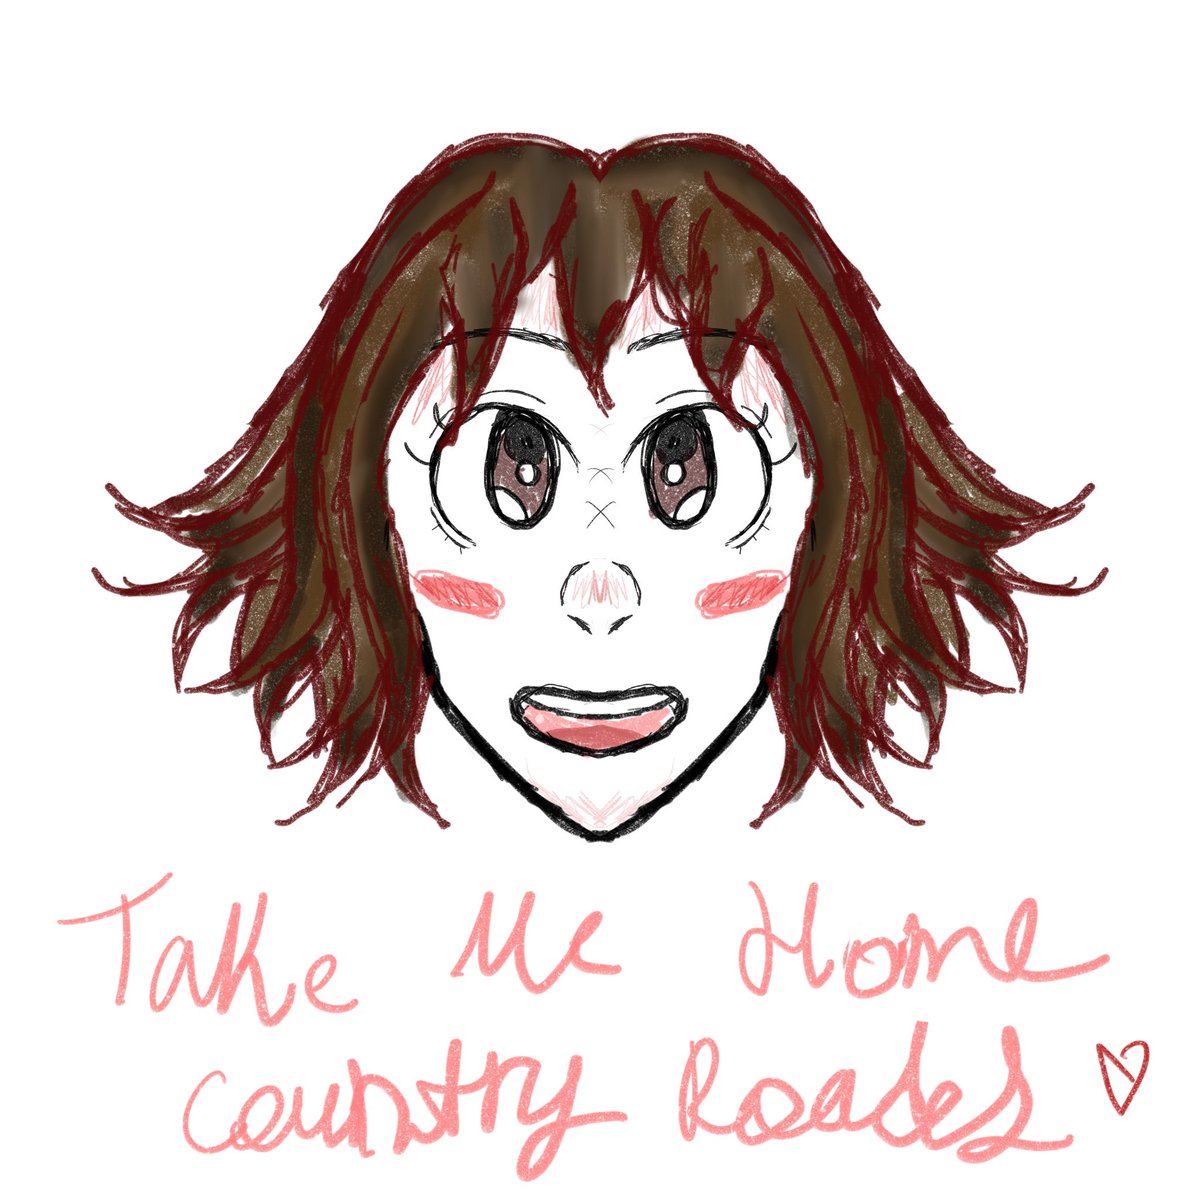 Country roads, take me home ~ 🎻 🐱 

#artmoots #whisperoftheheart